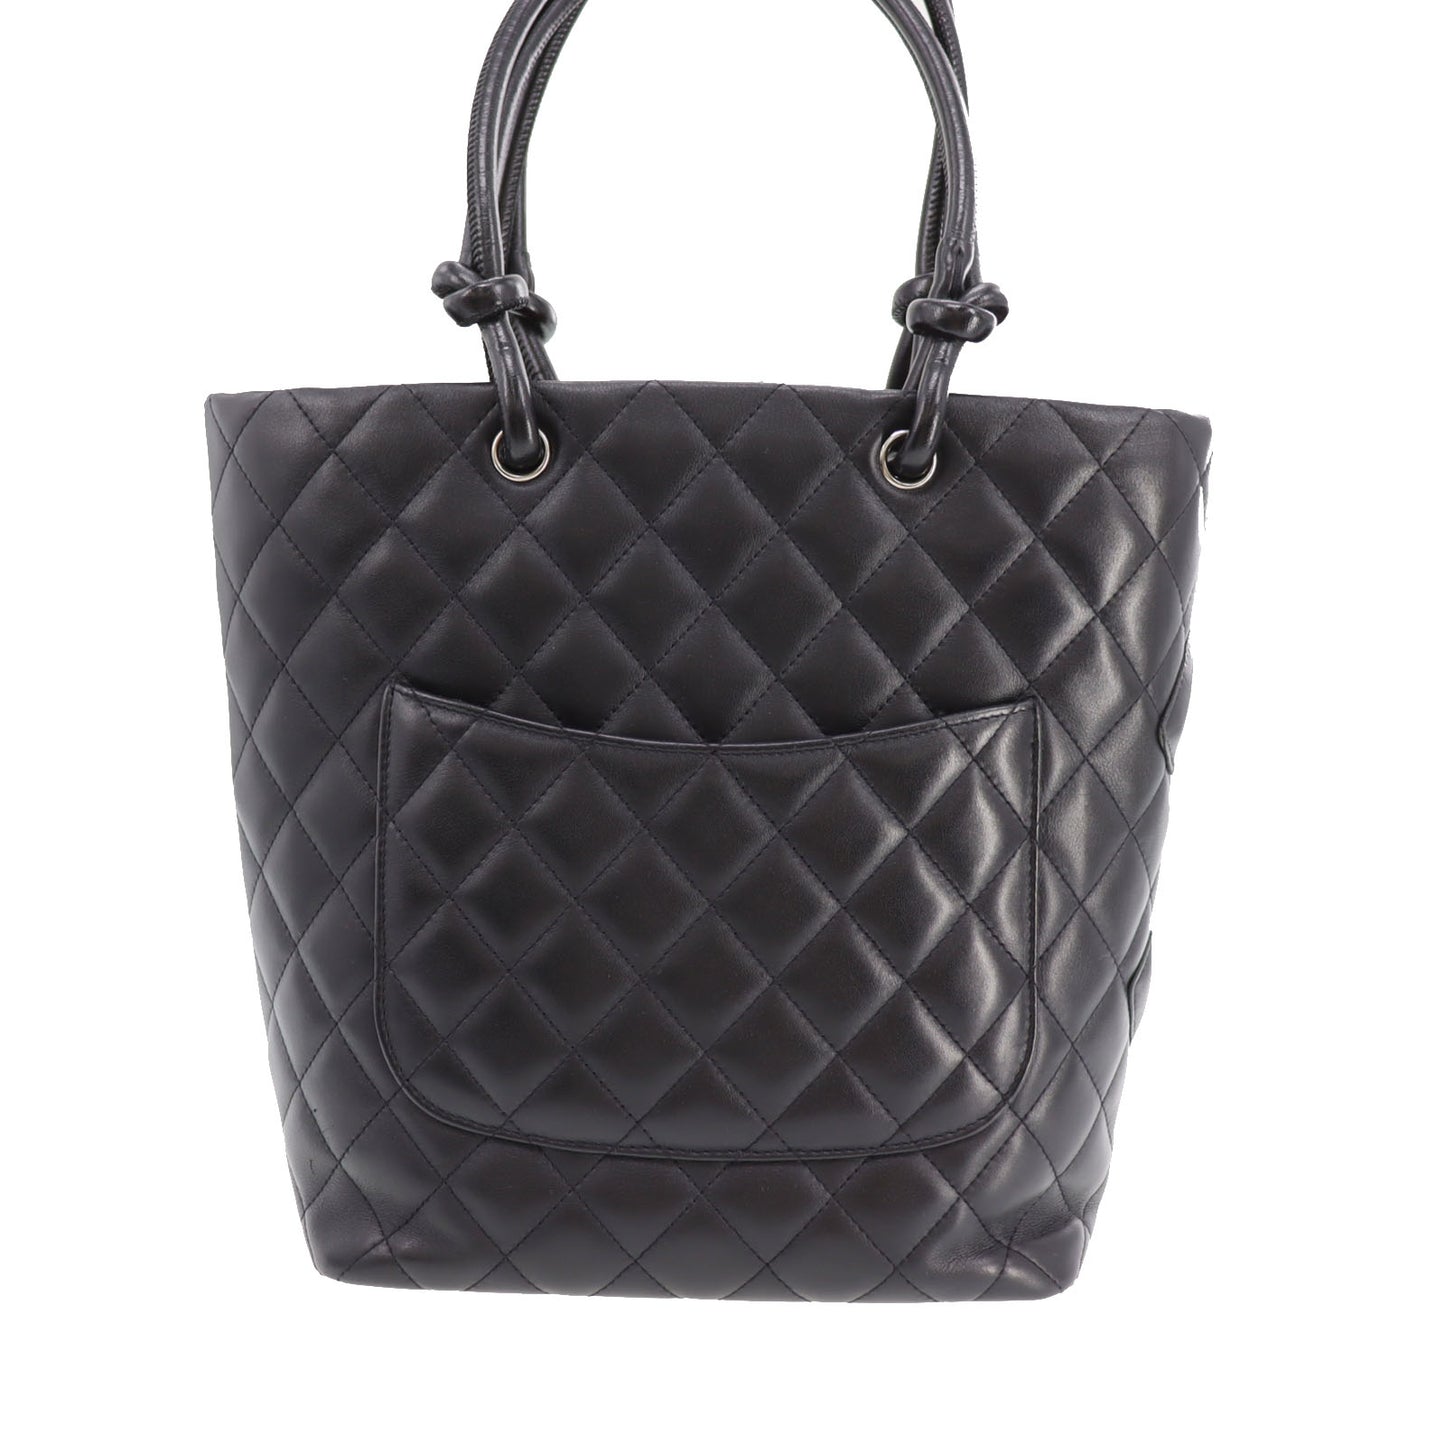 CHANEL Cambon Line Tote Handbag Black Leather #CK144